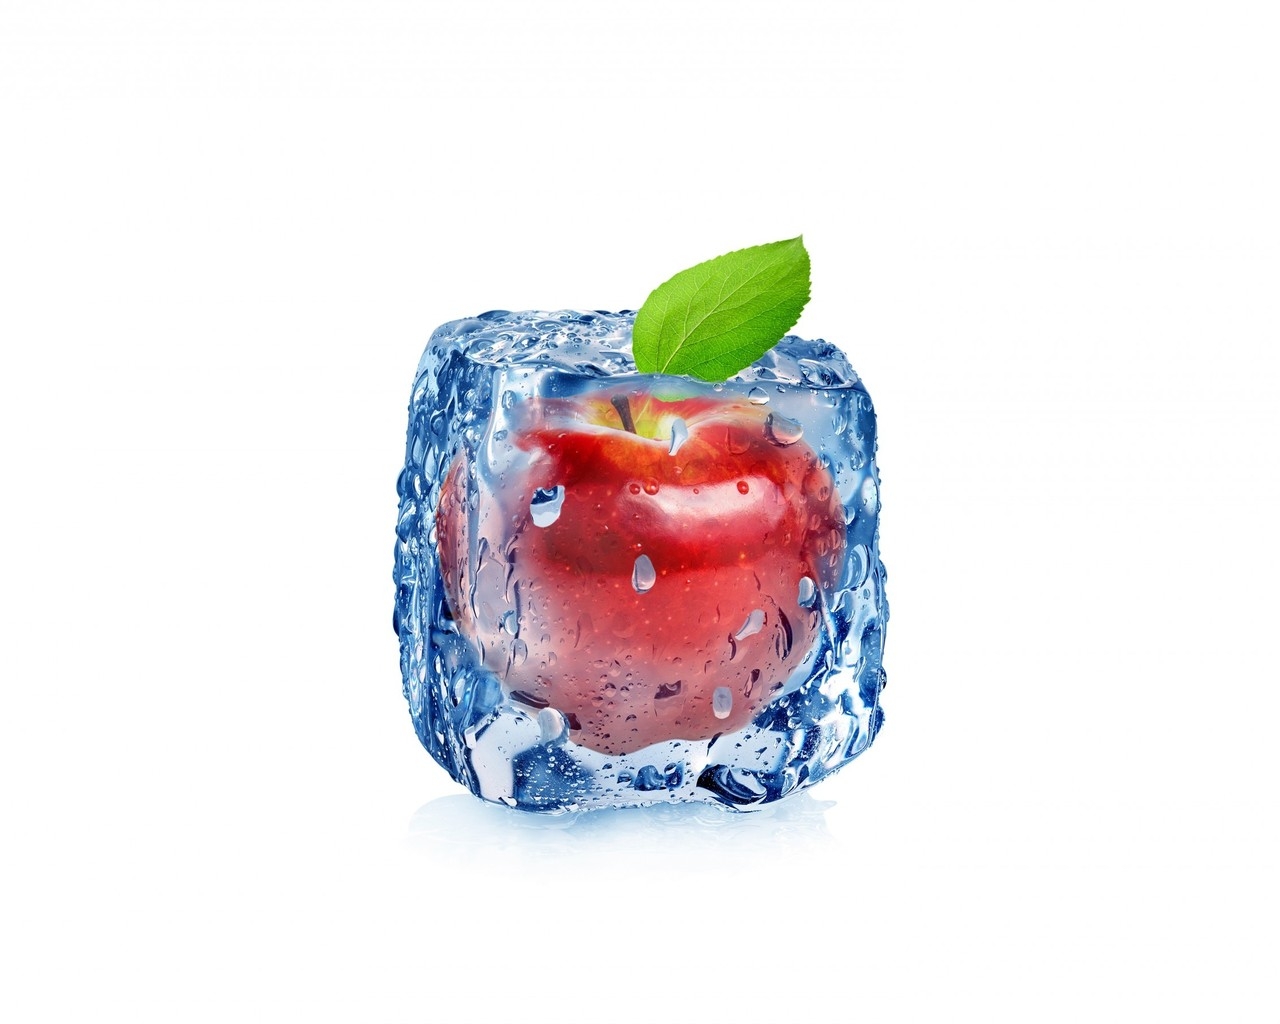 Frozen Apple for 1280 x 1024 resolution